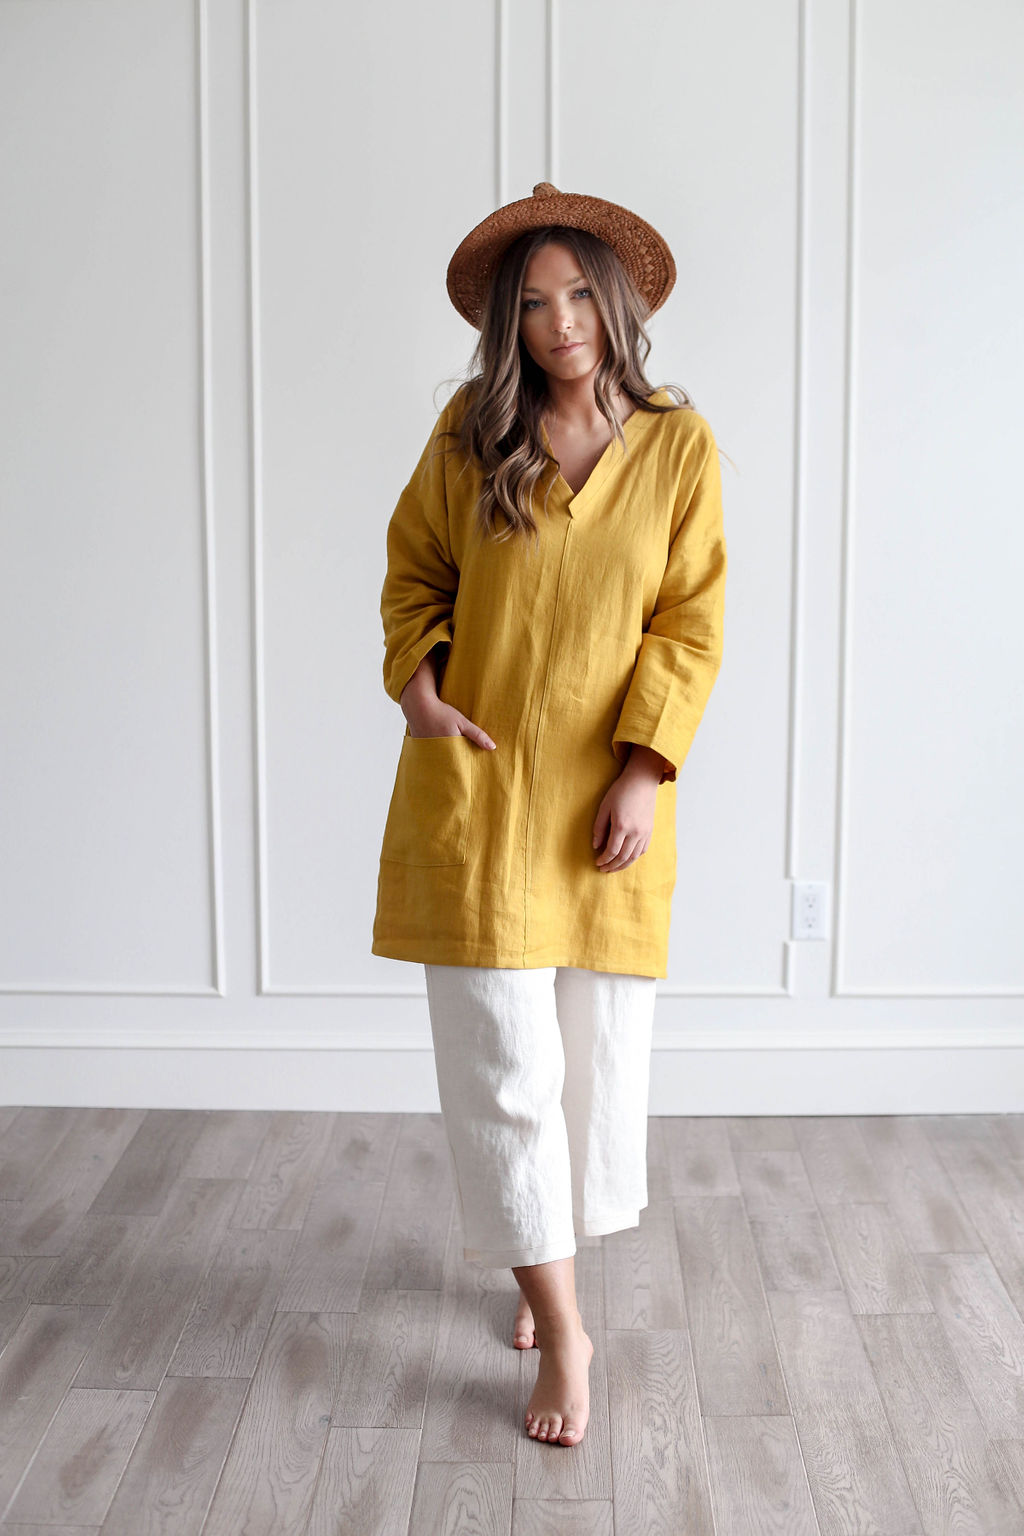 Nomi Designs | Linen Tunic in Cheddar over linen pants.jpg